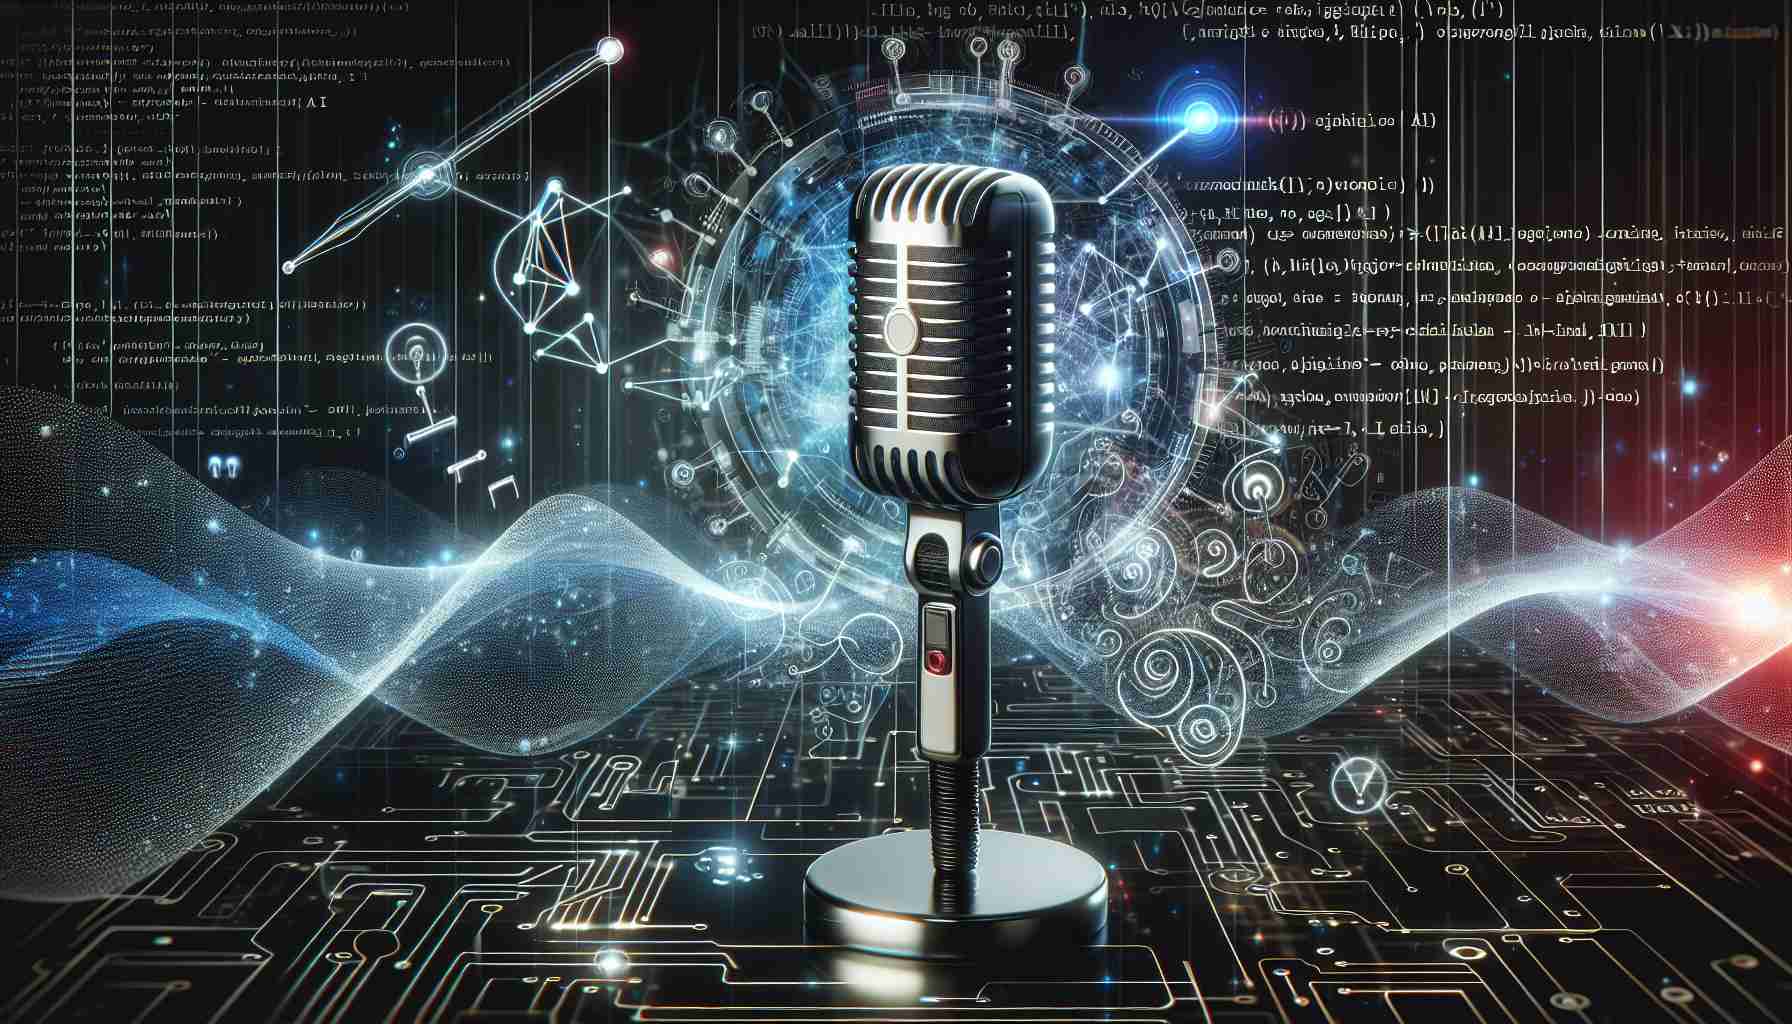 Revolutionizing speech representation with AI innovations